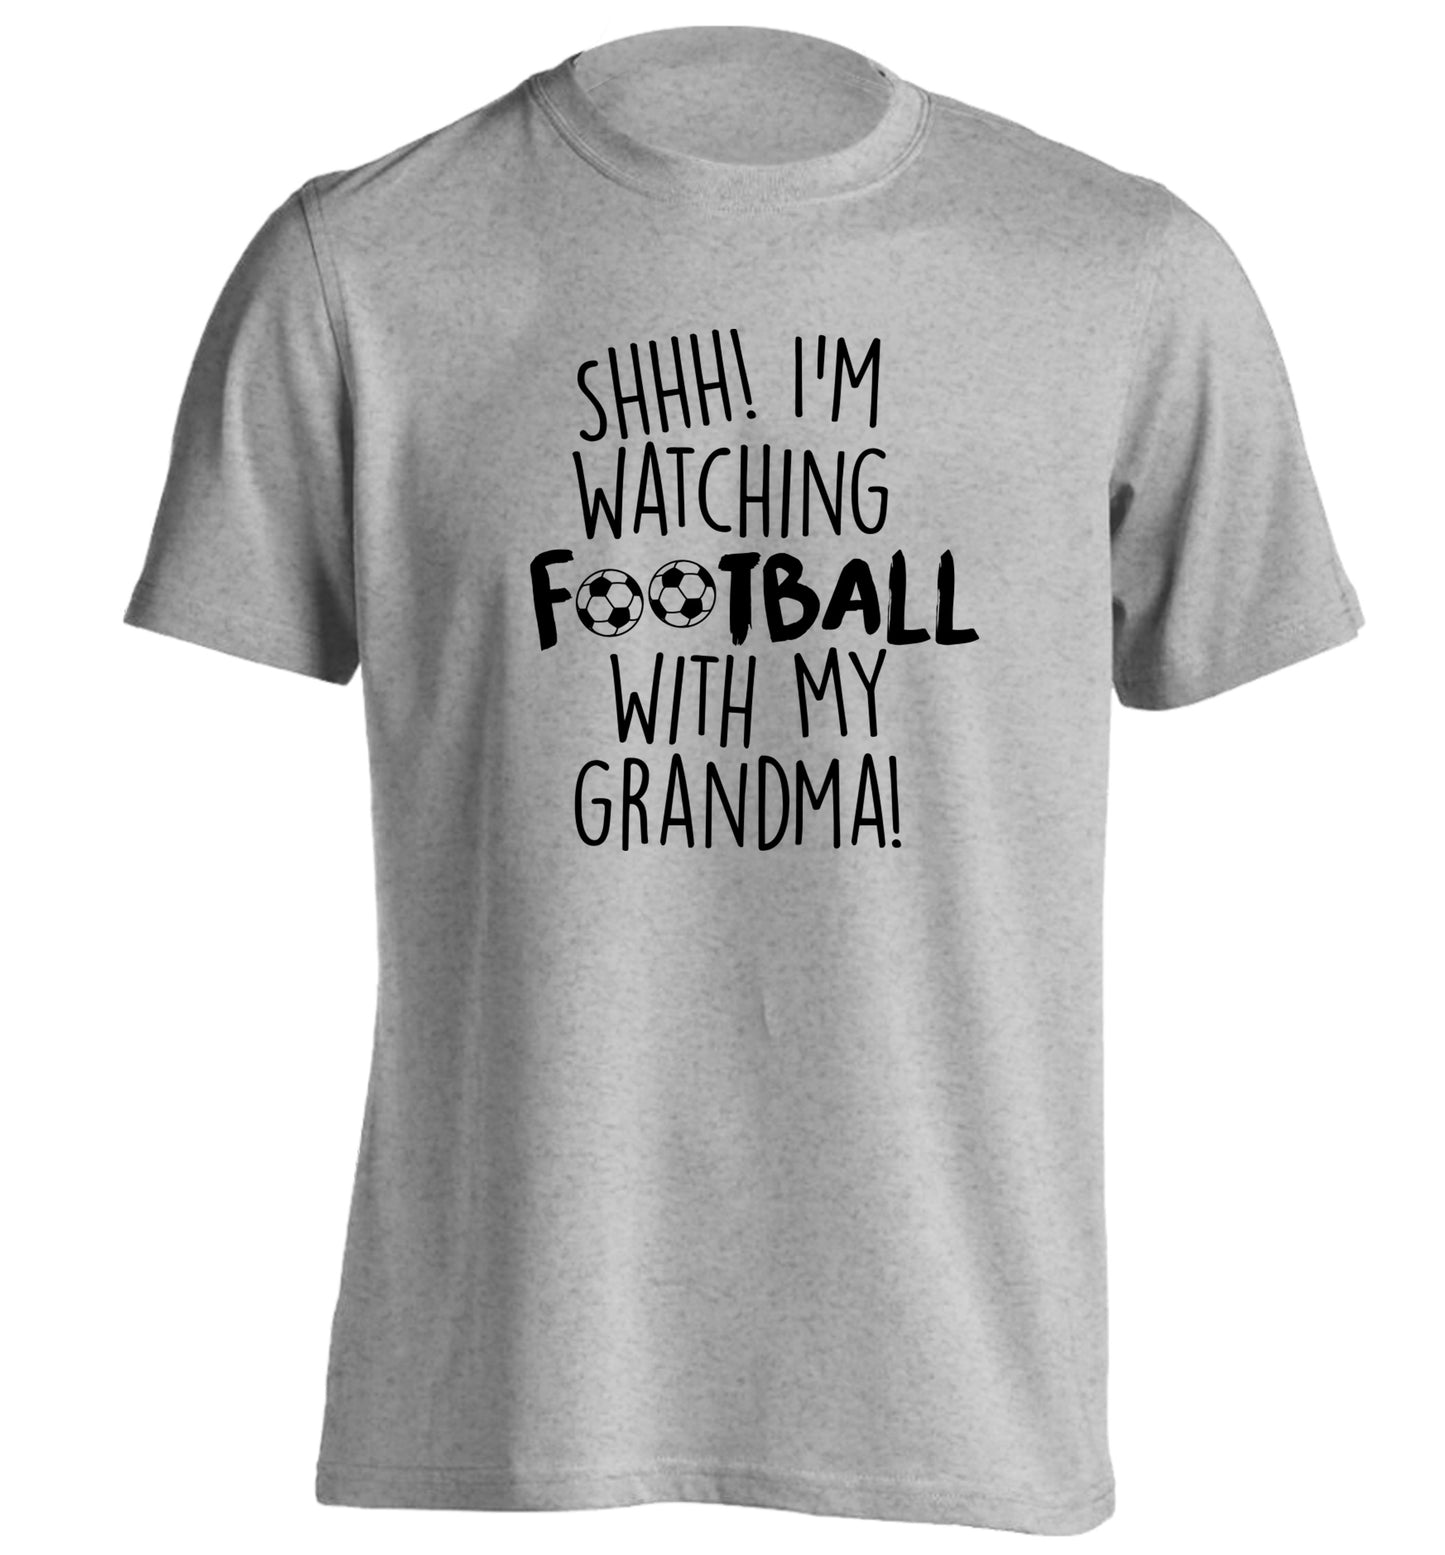 Shhh I'm watching football with my grandma adults unisexgrey Tshirt 2XL